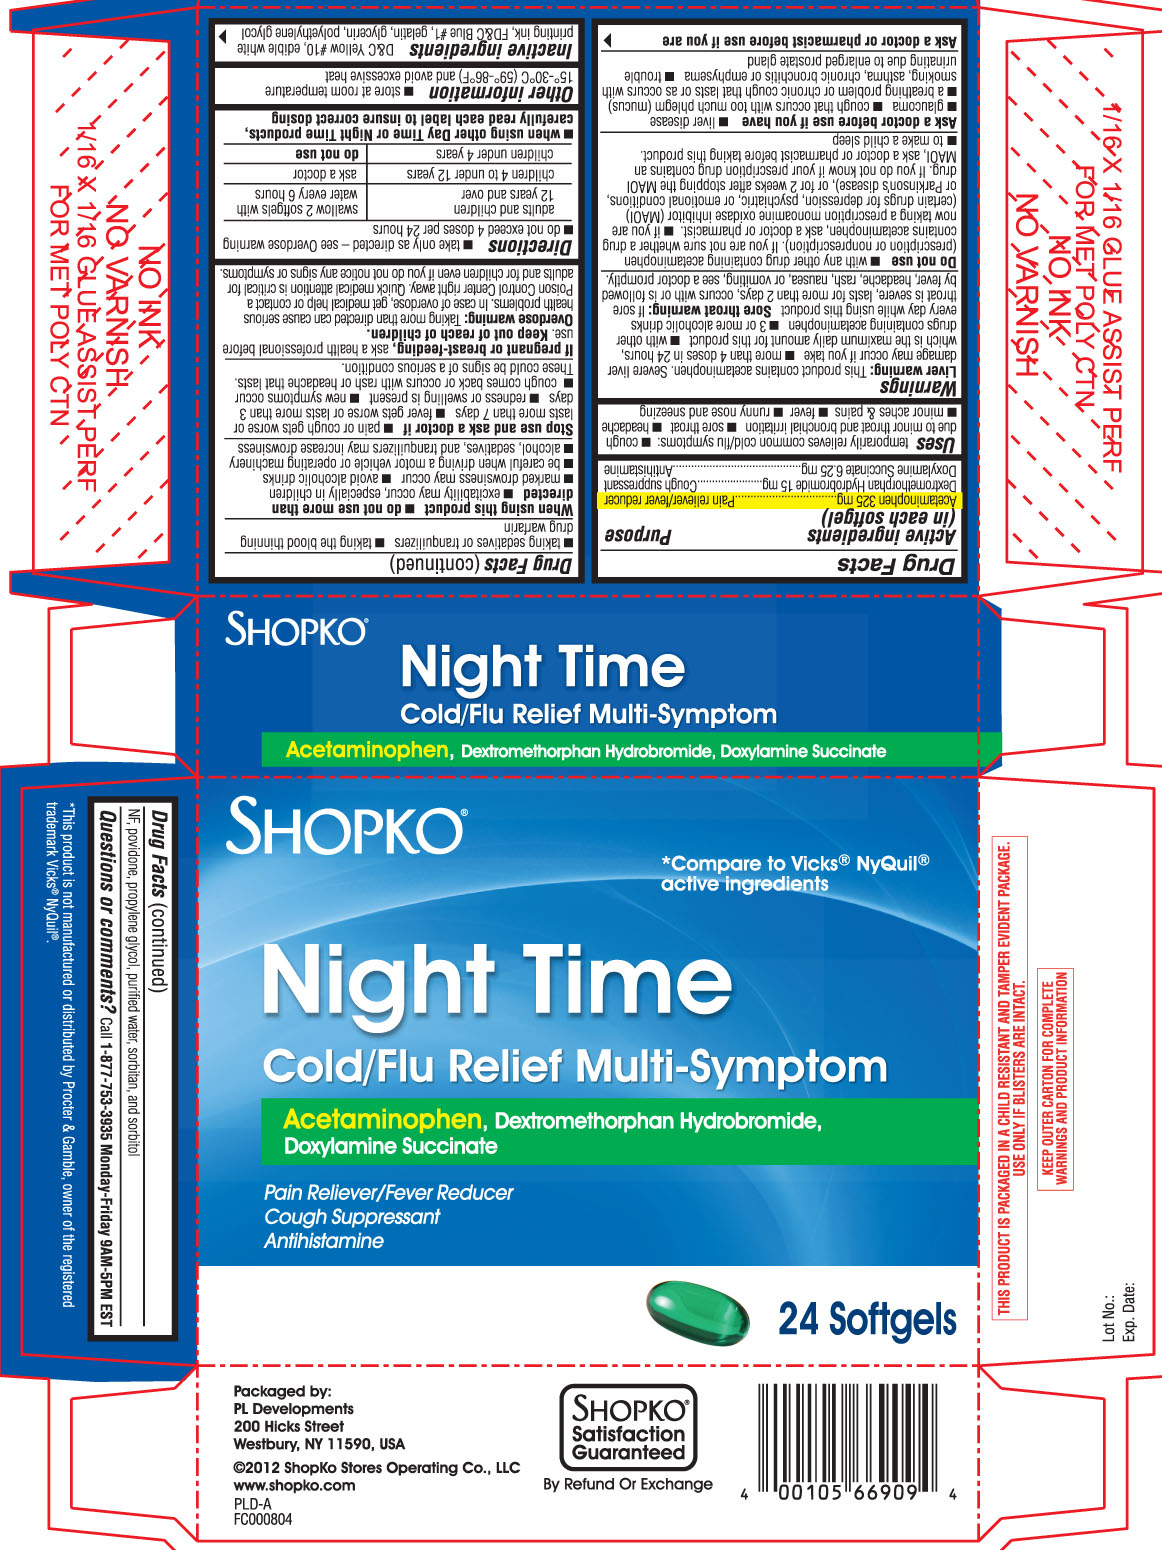 Shopko night time cold/ flu relief